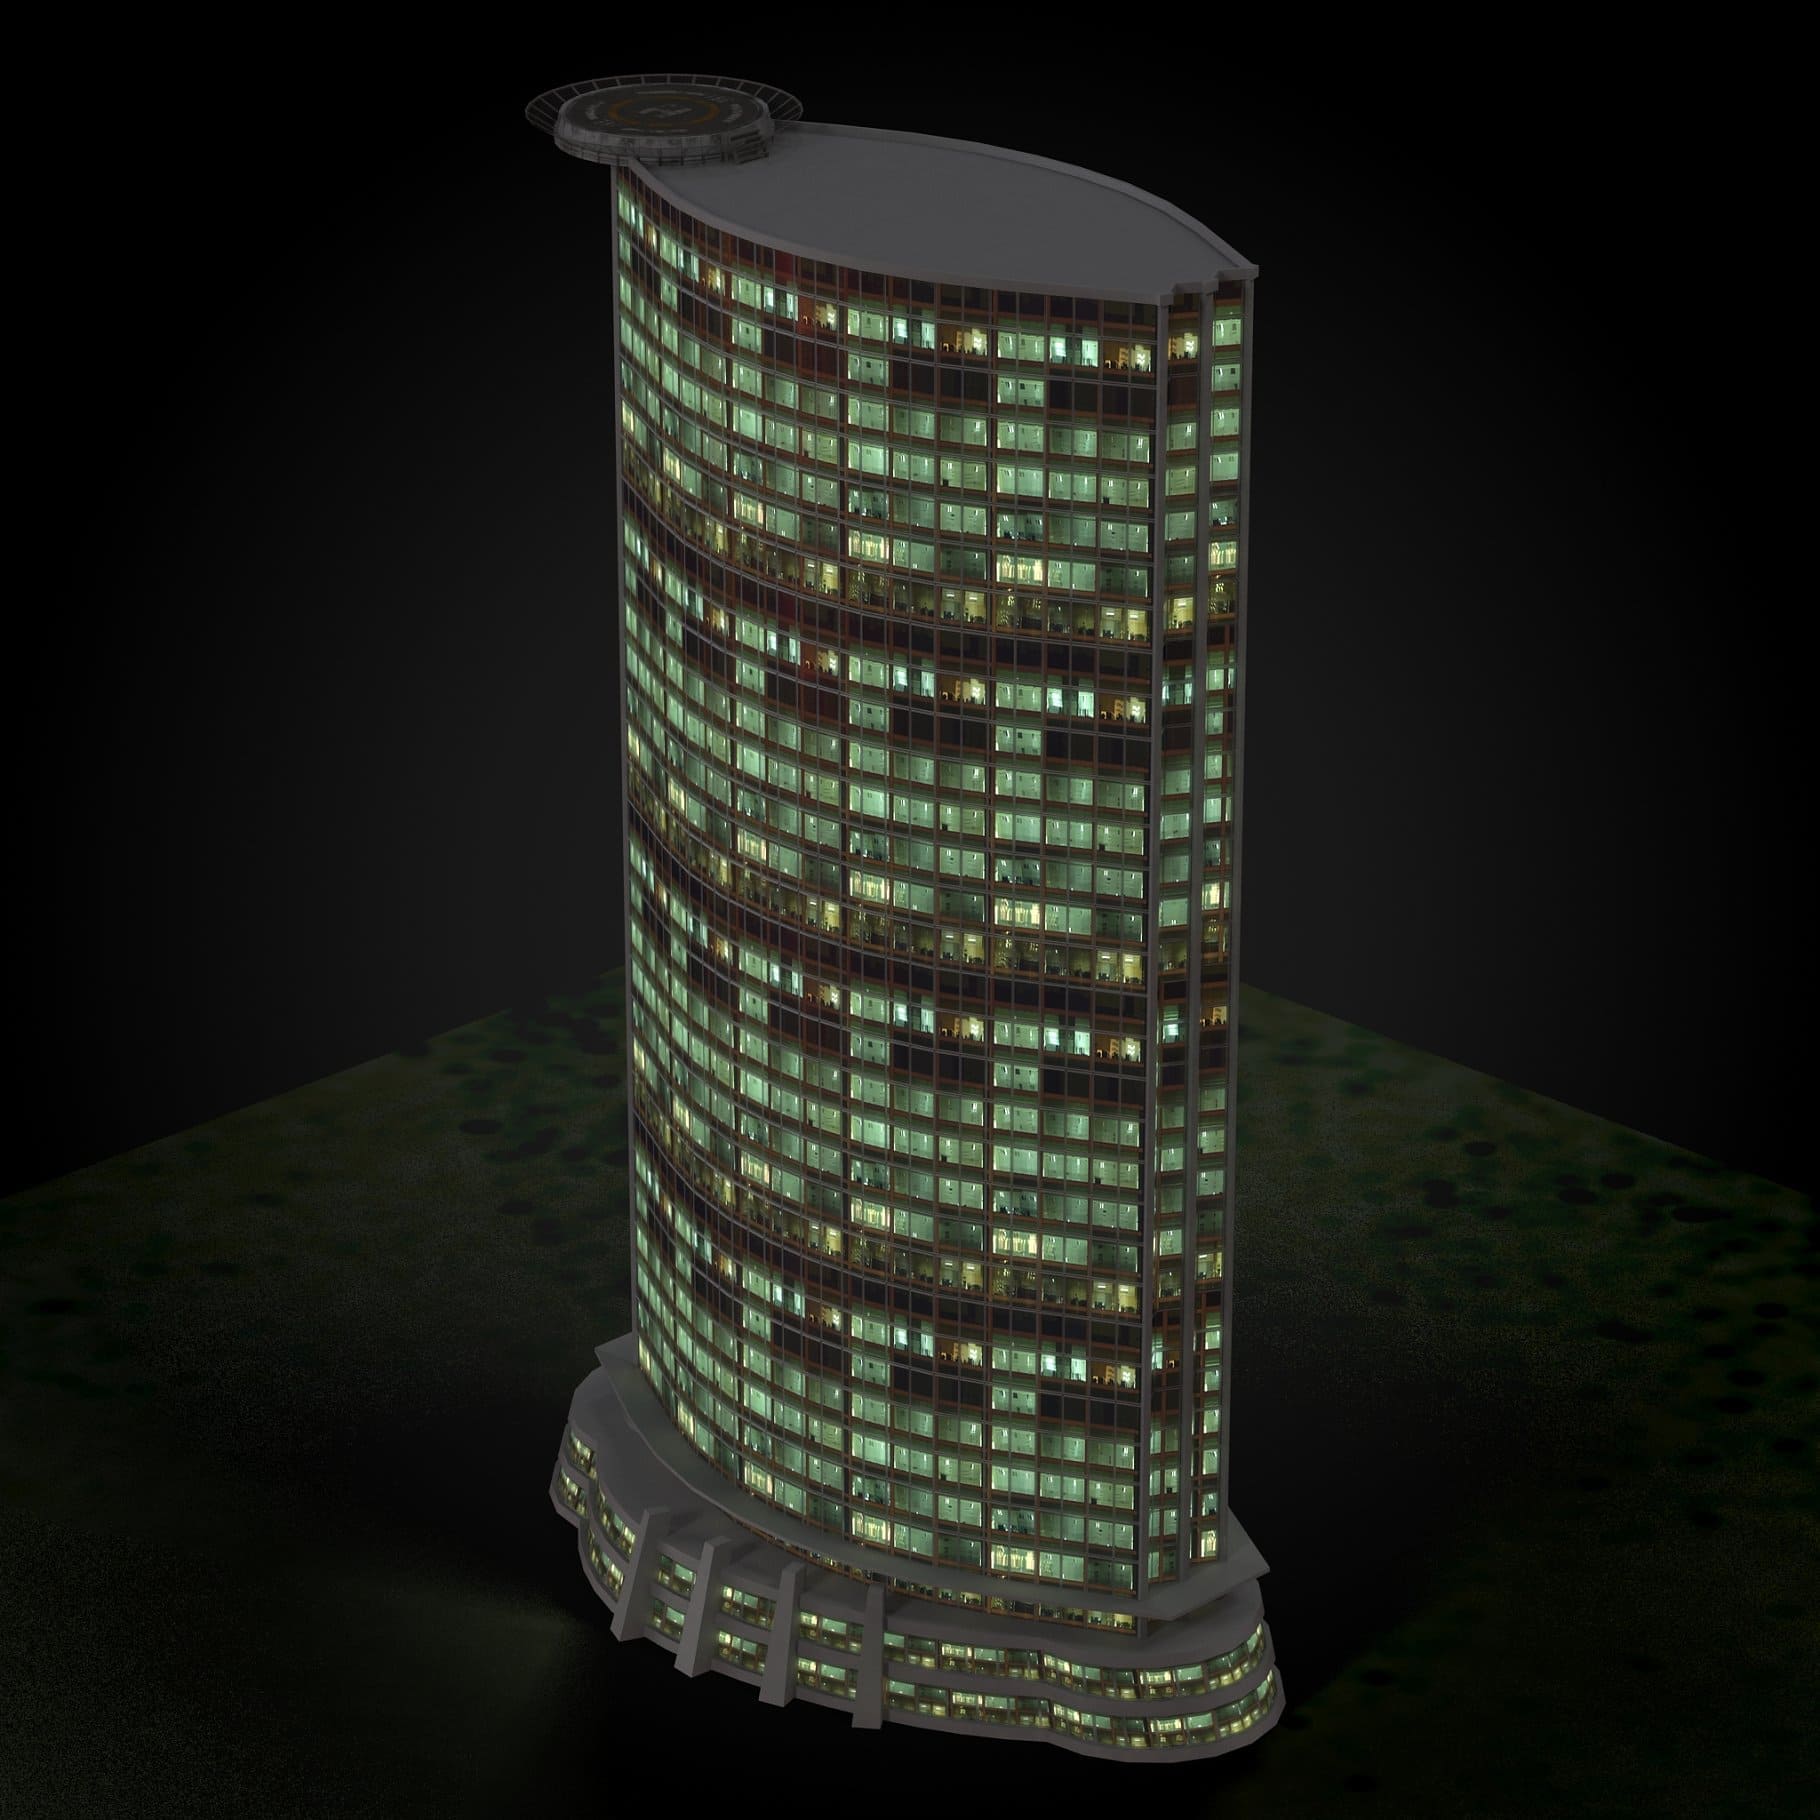 Image of a skyscraper with dark and illuminated windows.